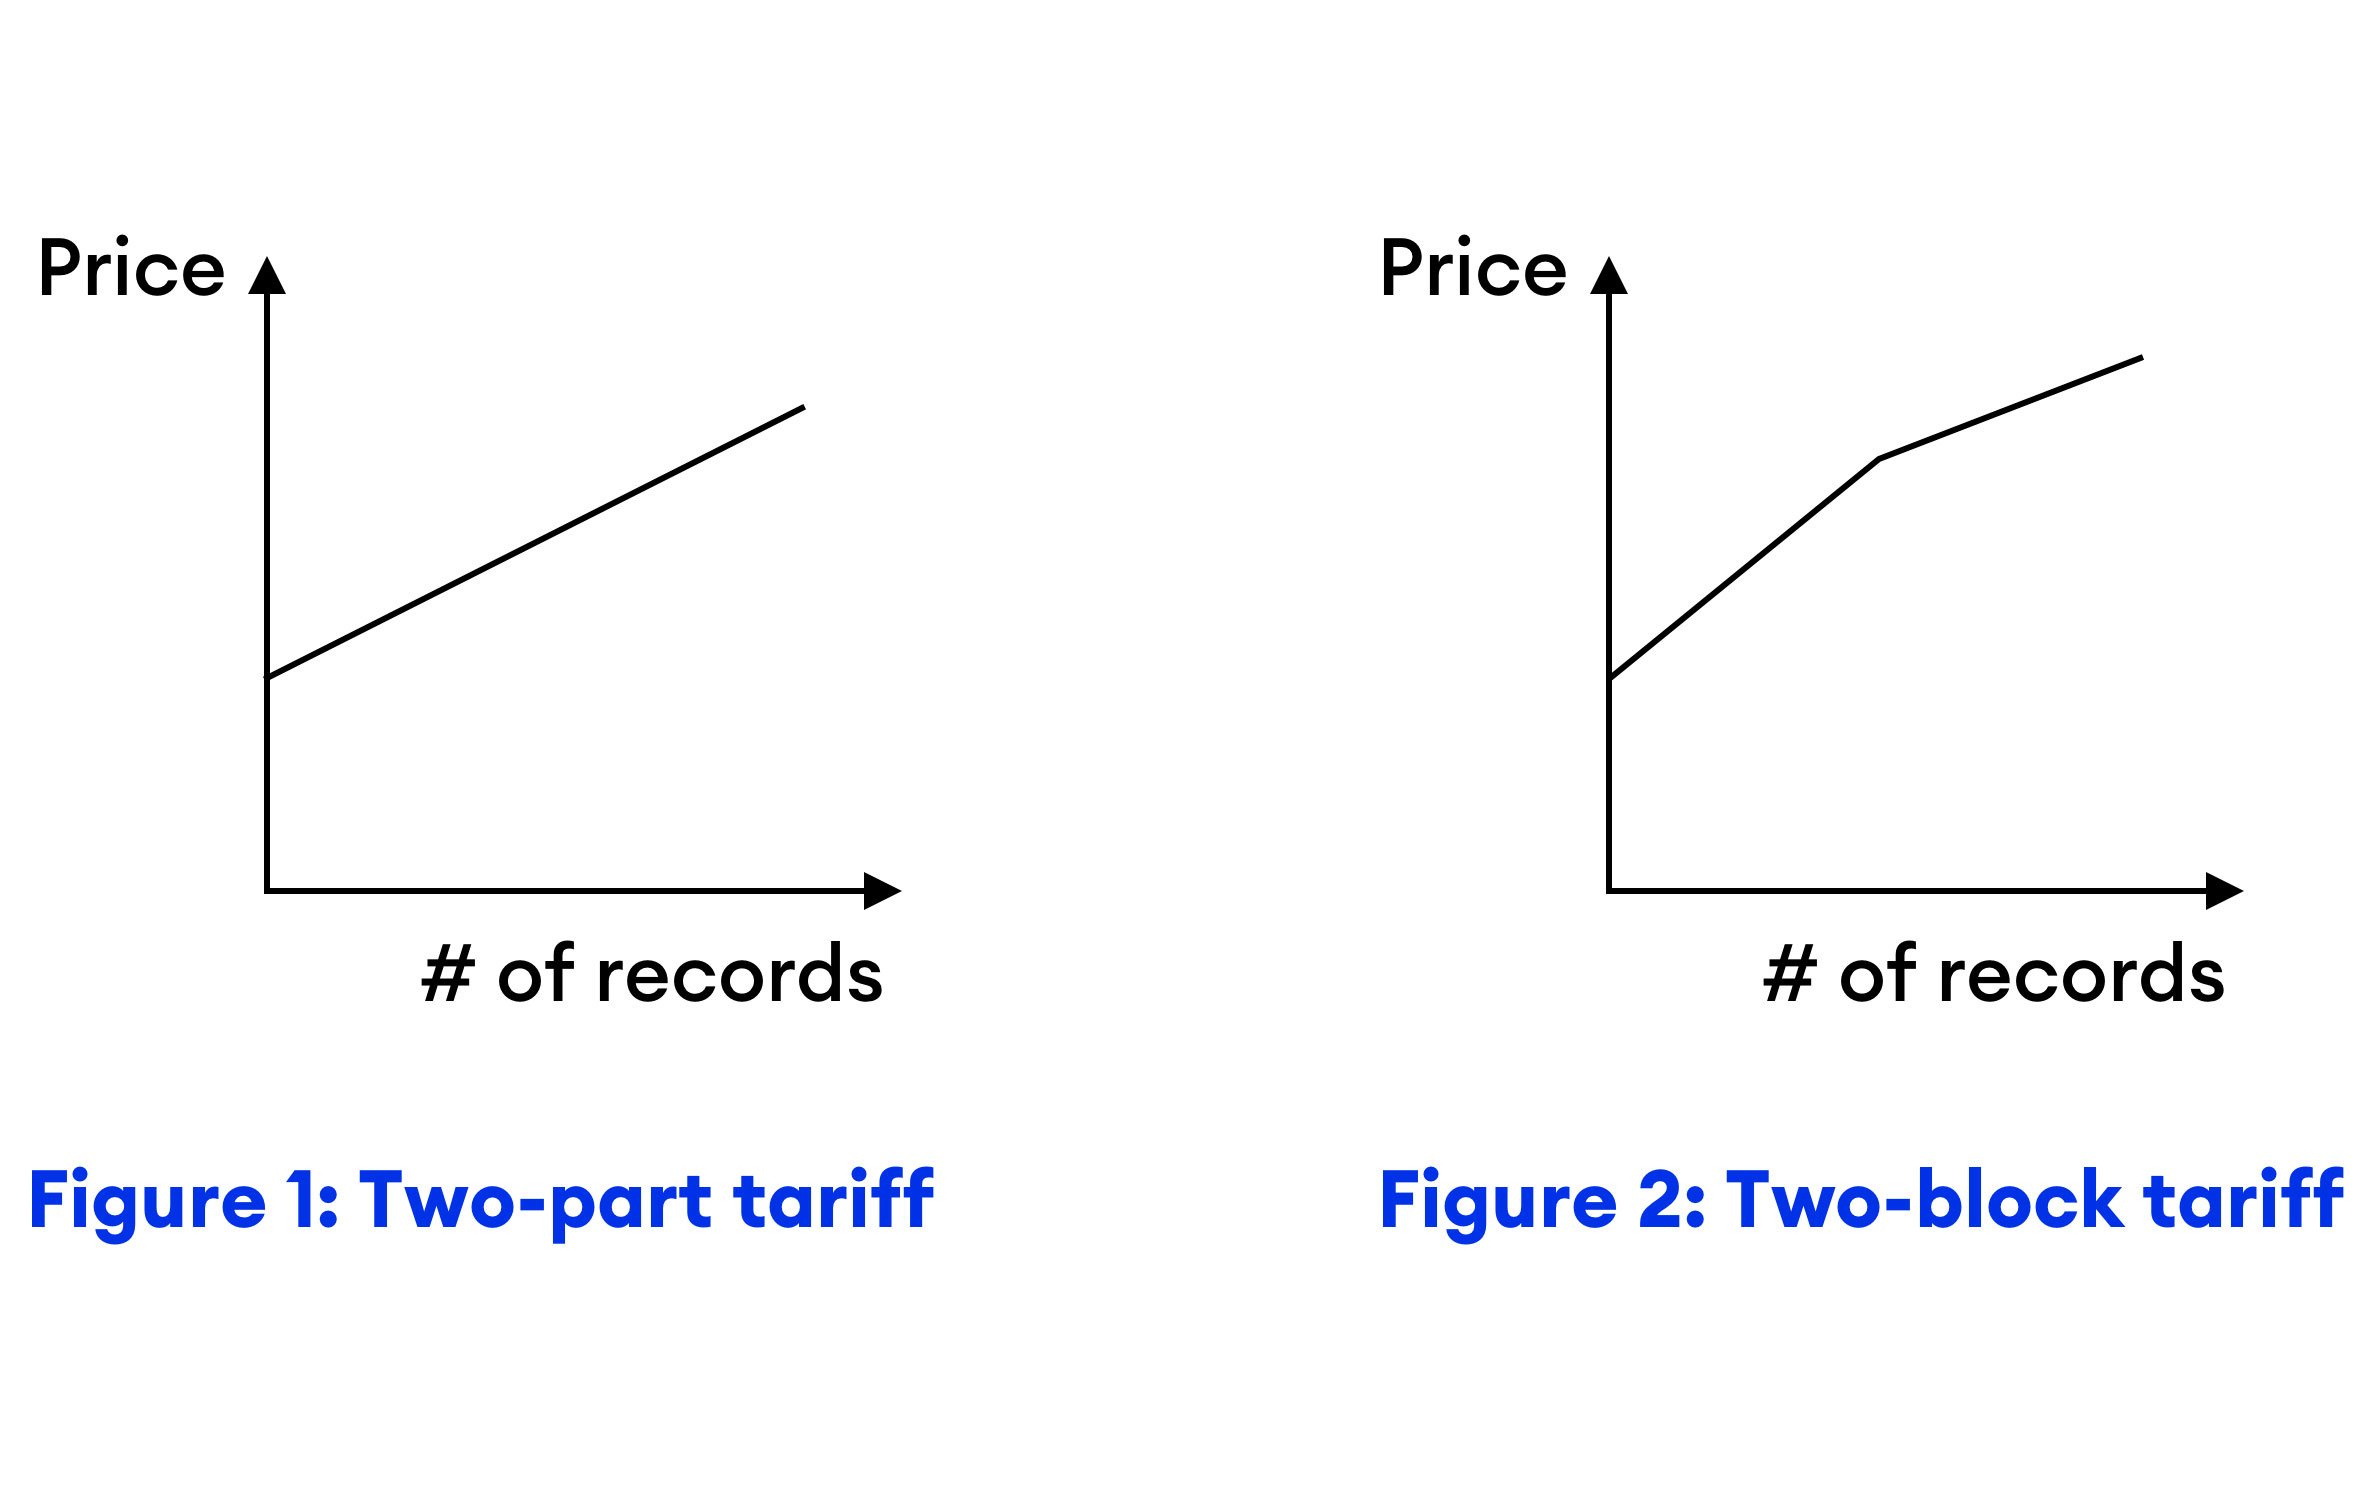 BLOG-031819-pricing-policies-graphs